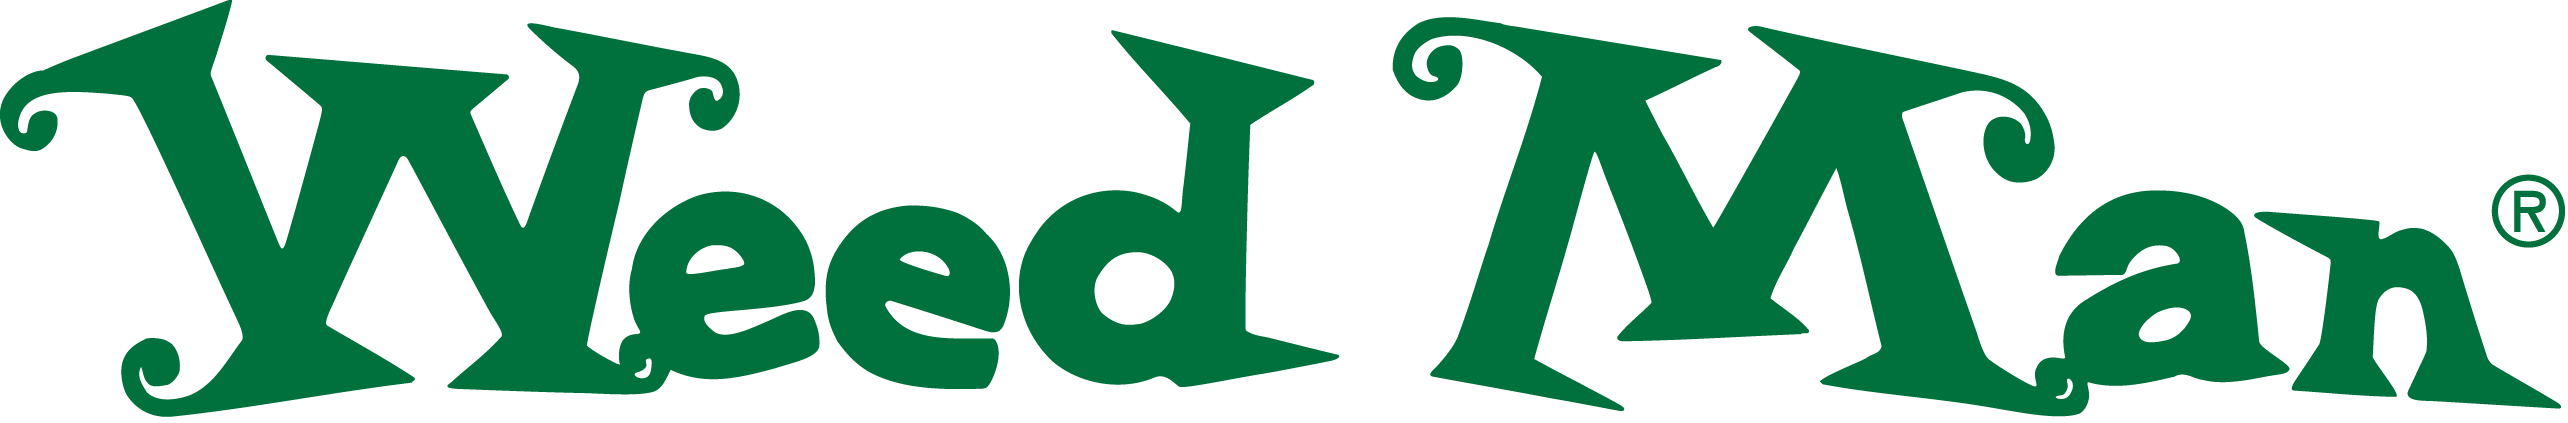 Weed Man Lawn Care logo